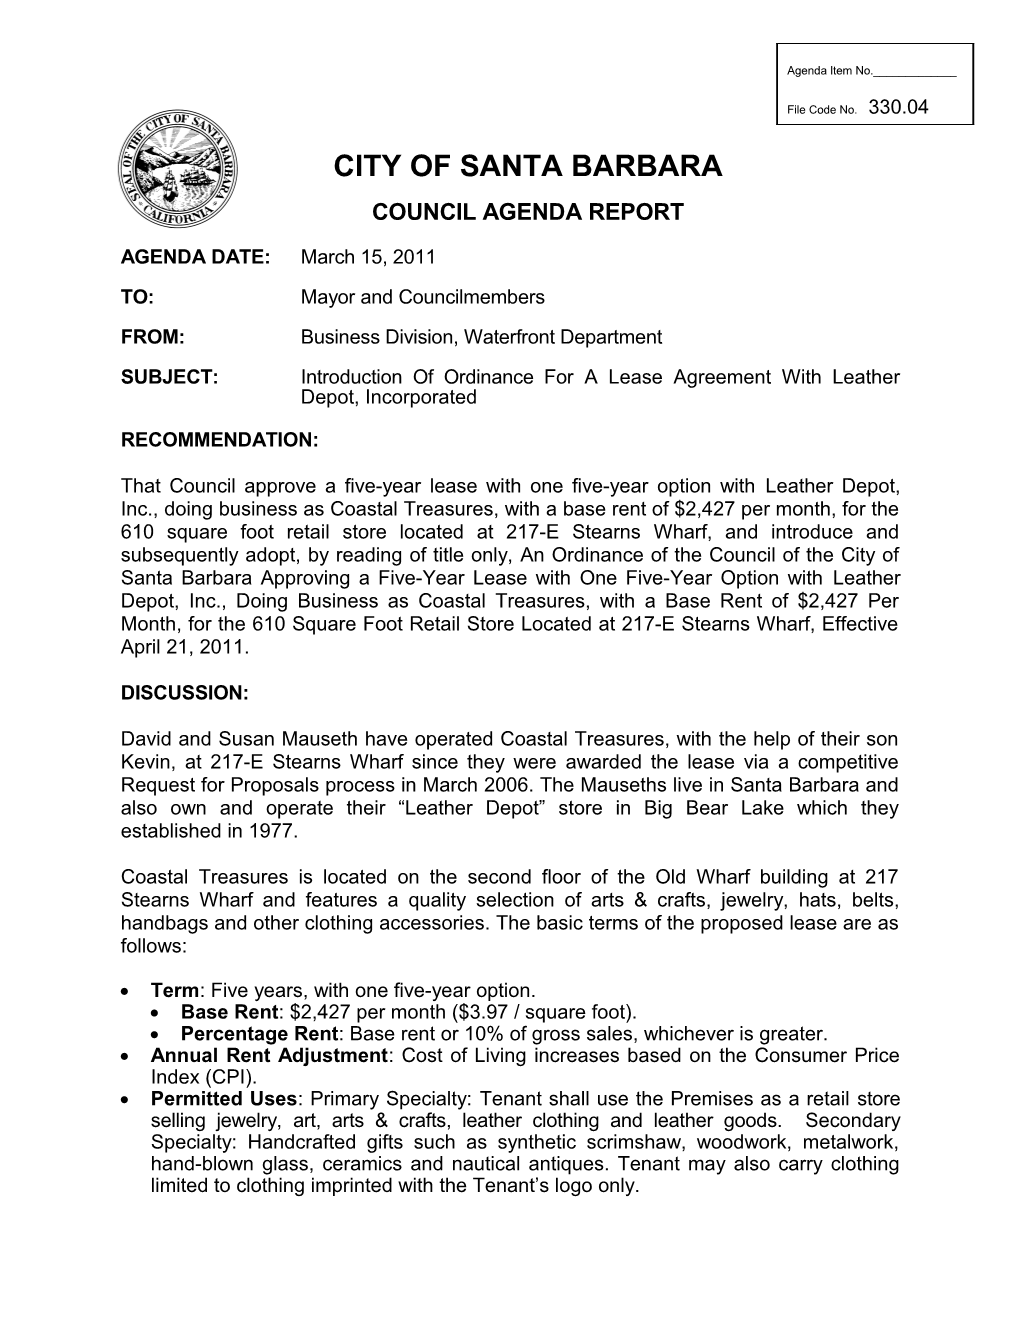 City of Santa Barbara s39